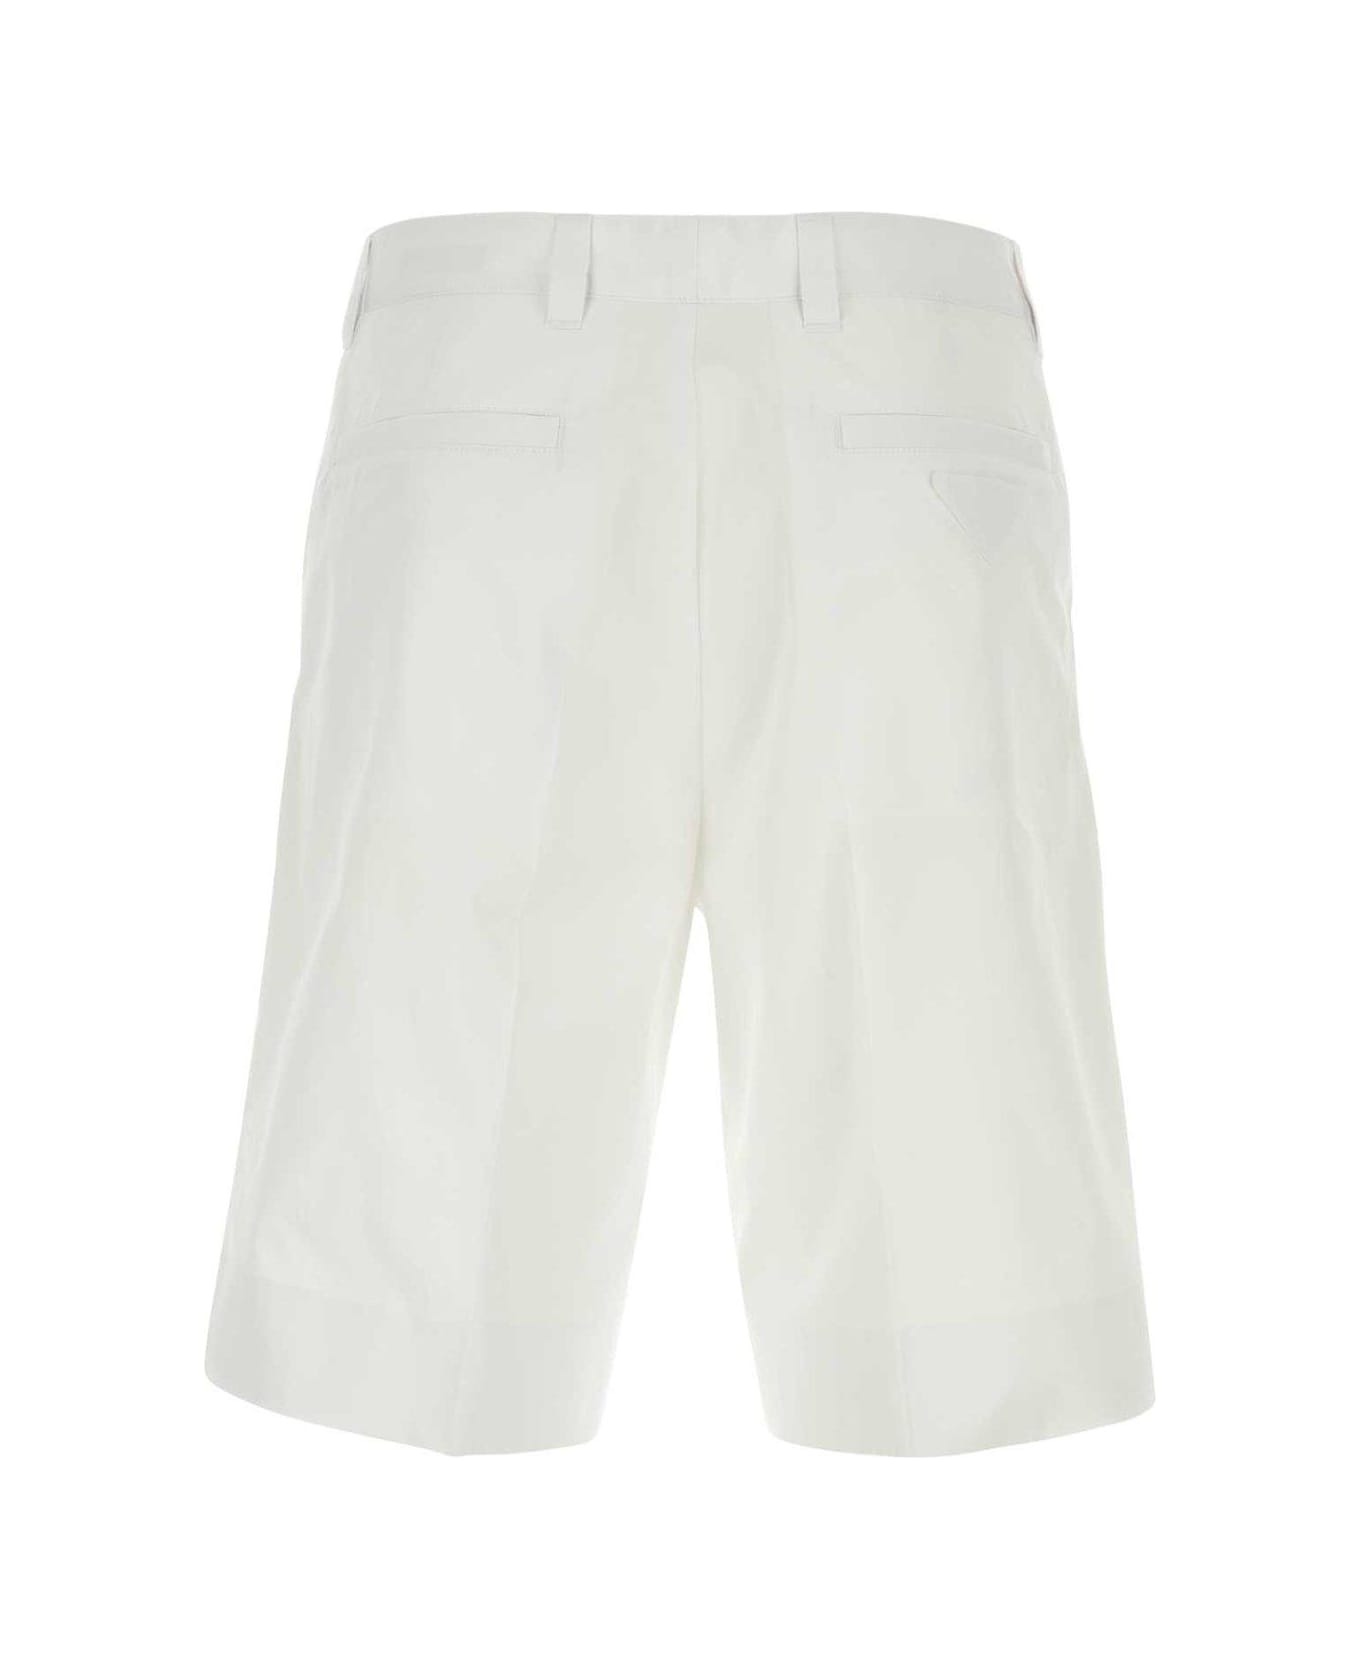 Prada Belt-looped Straight-leg Shorts - White